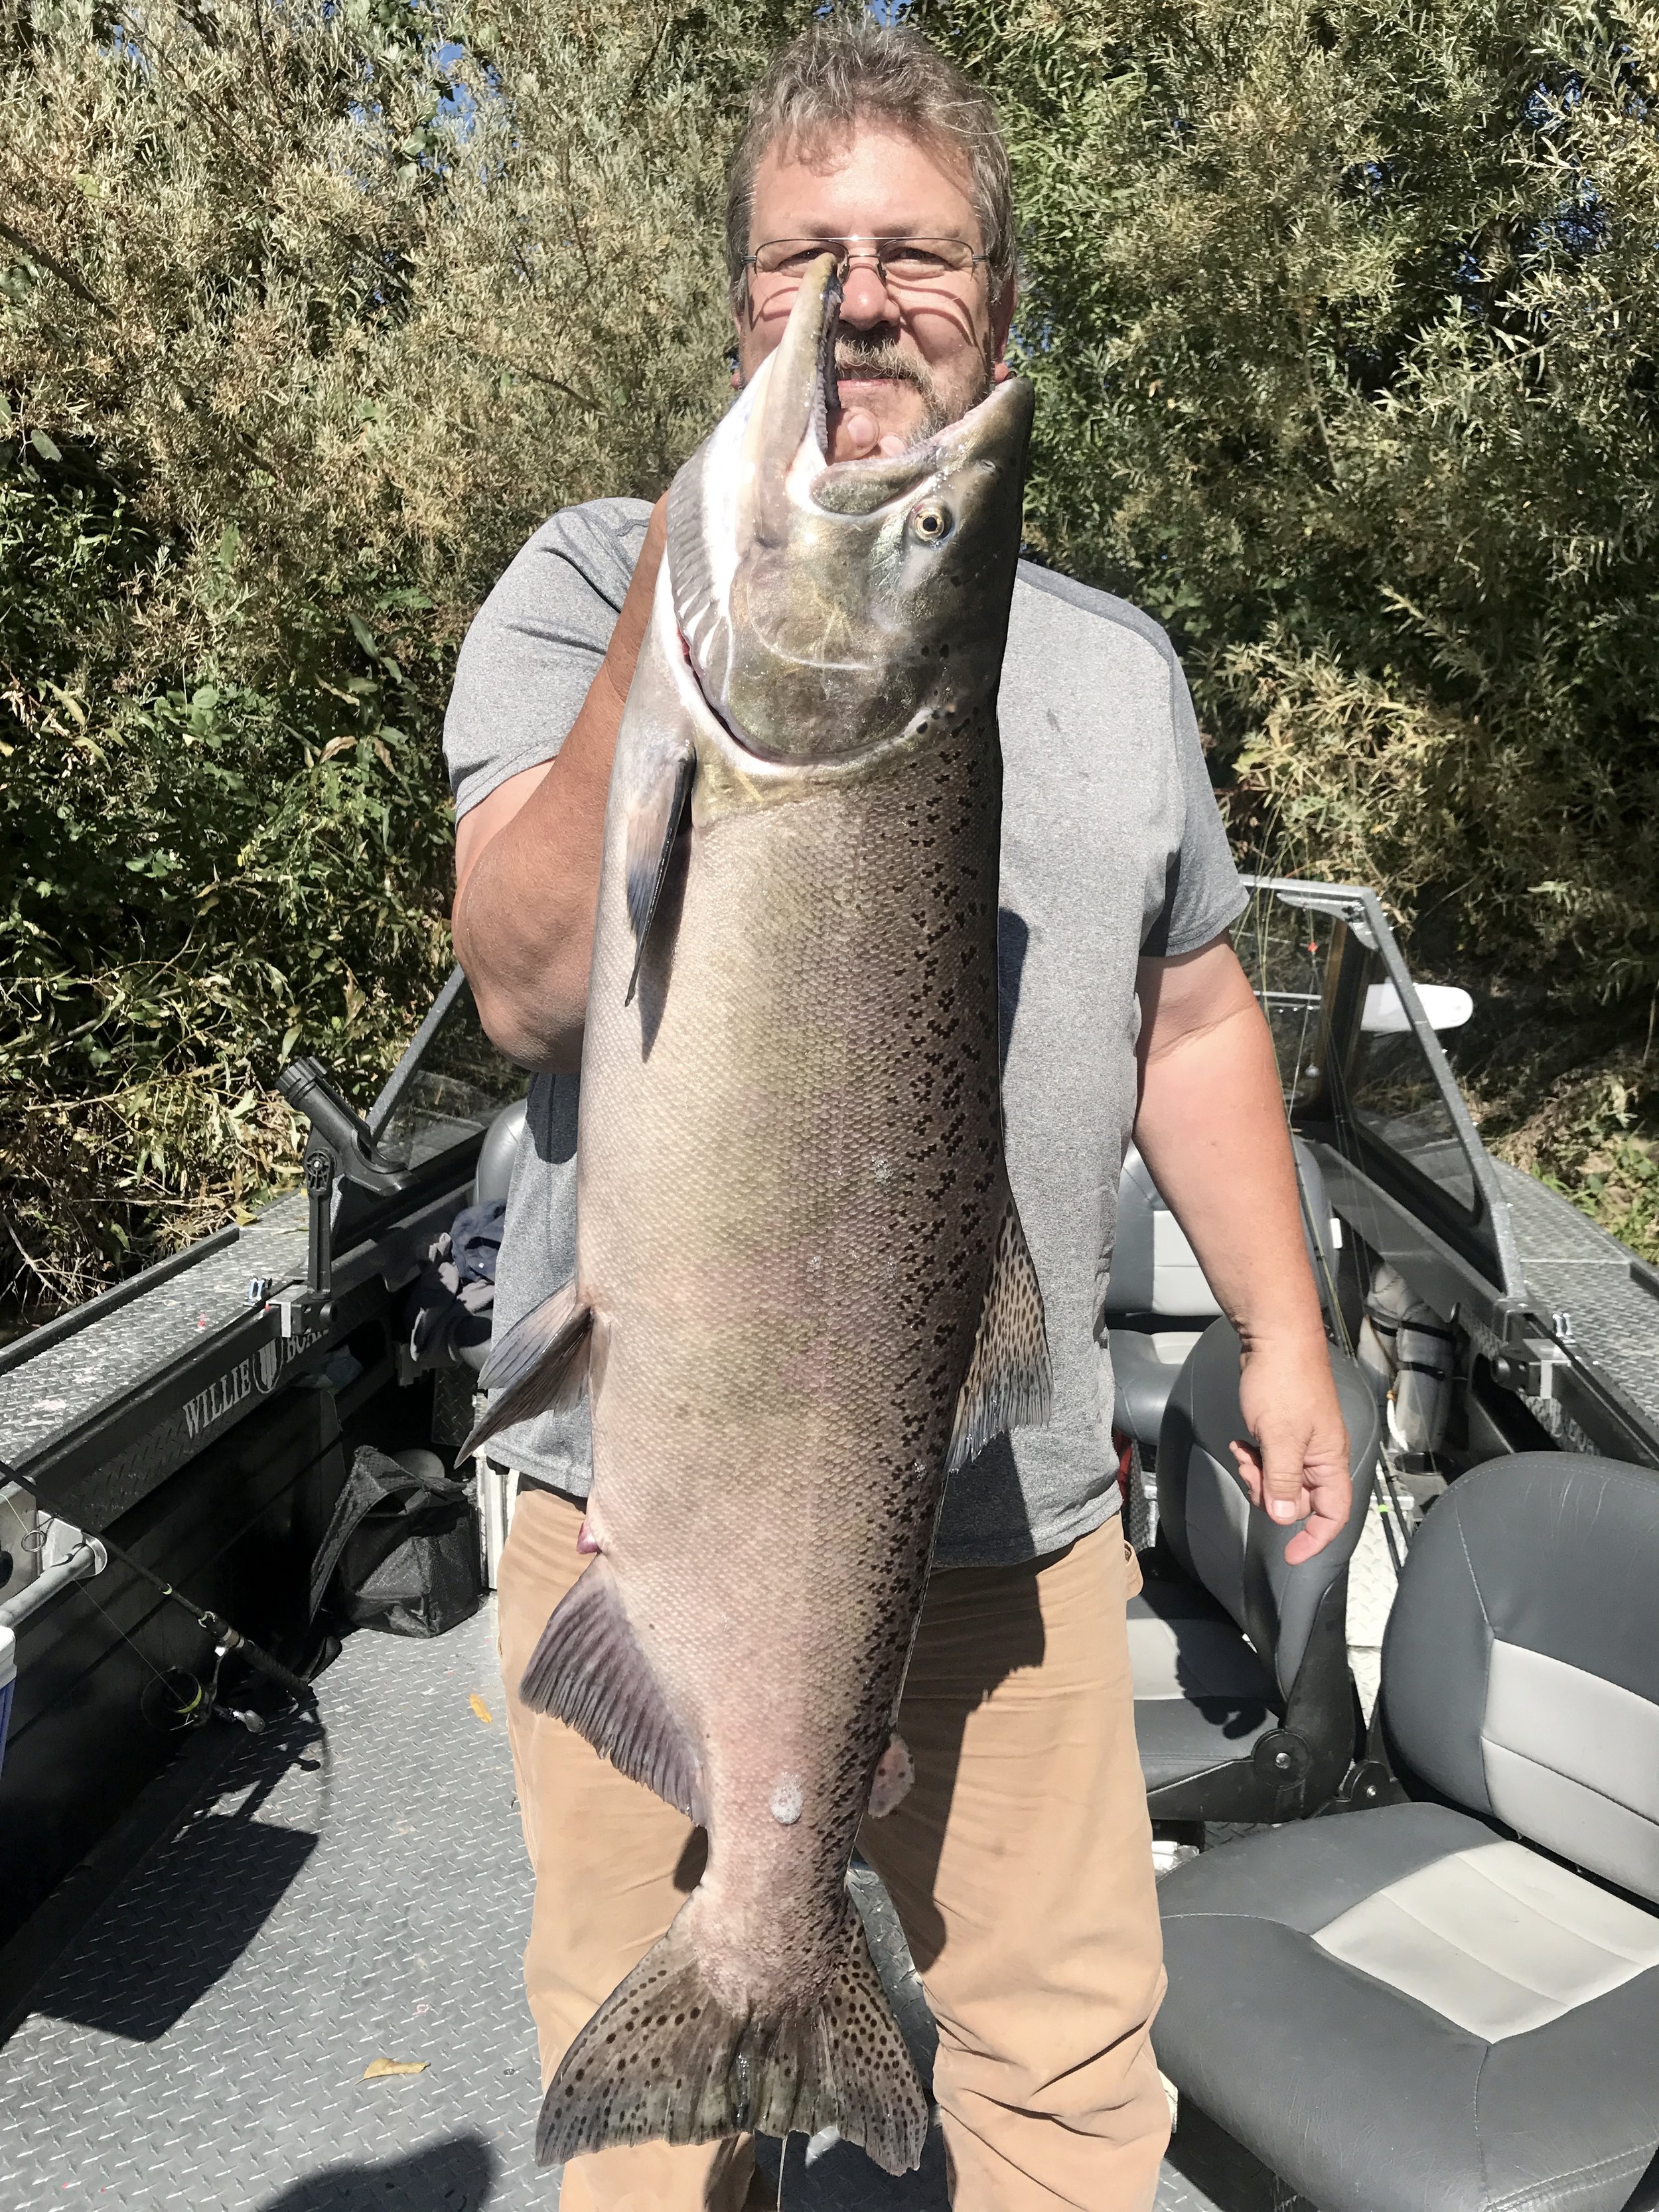 Sacramento River King salmon fishing is still a good option for